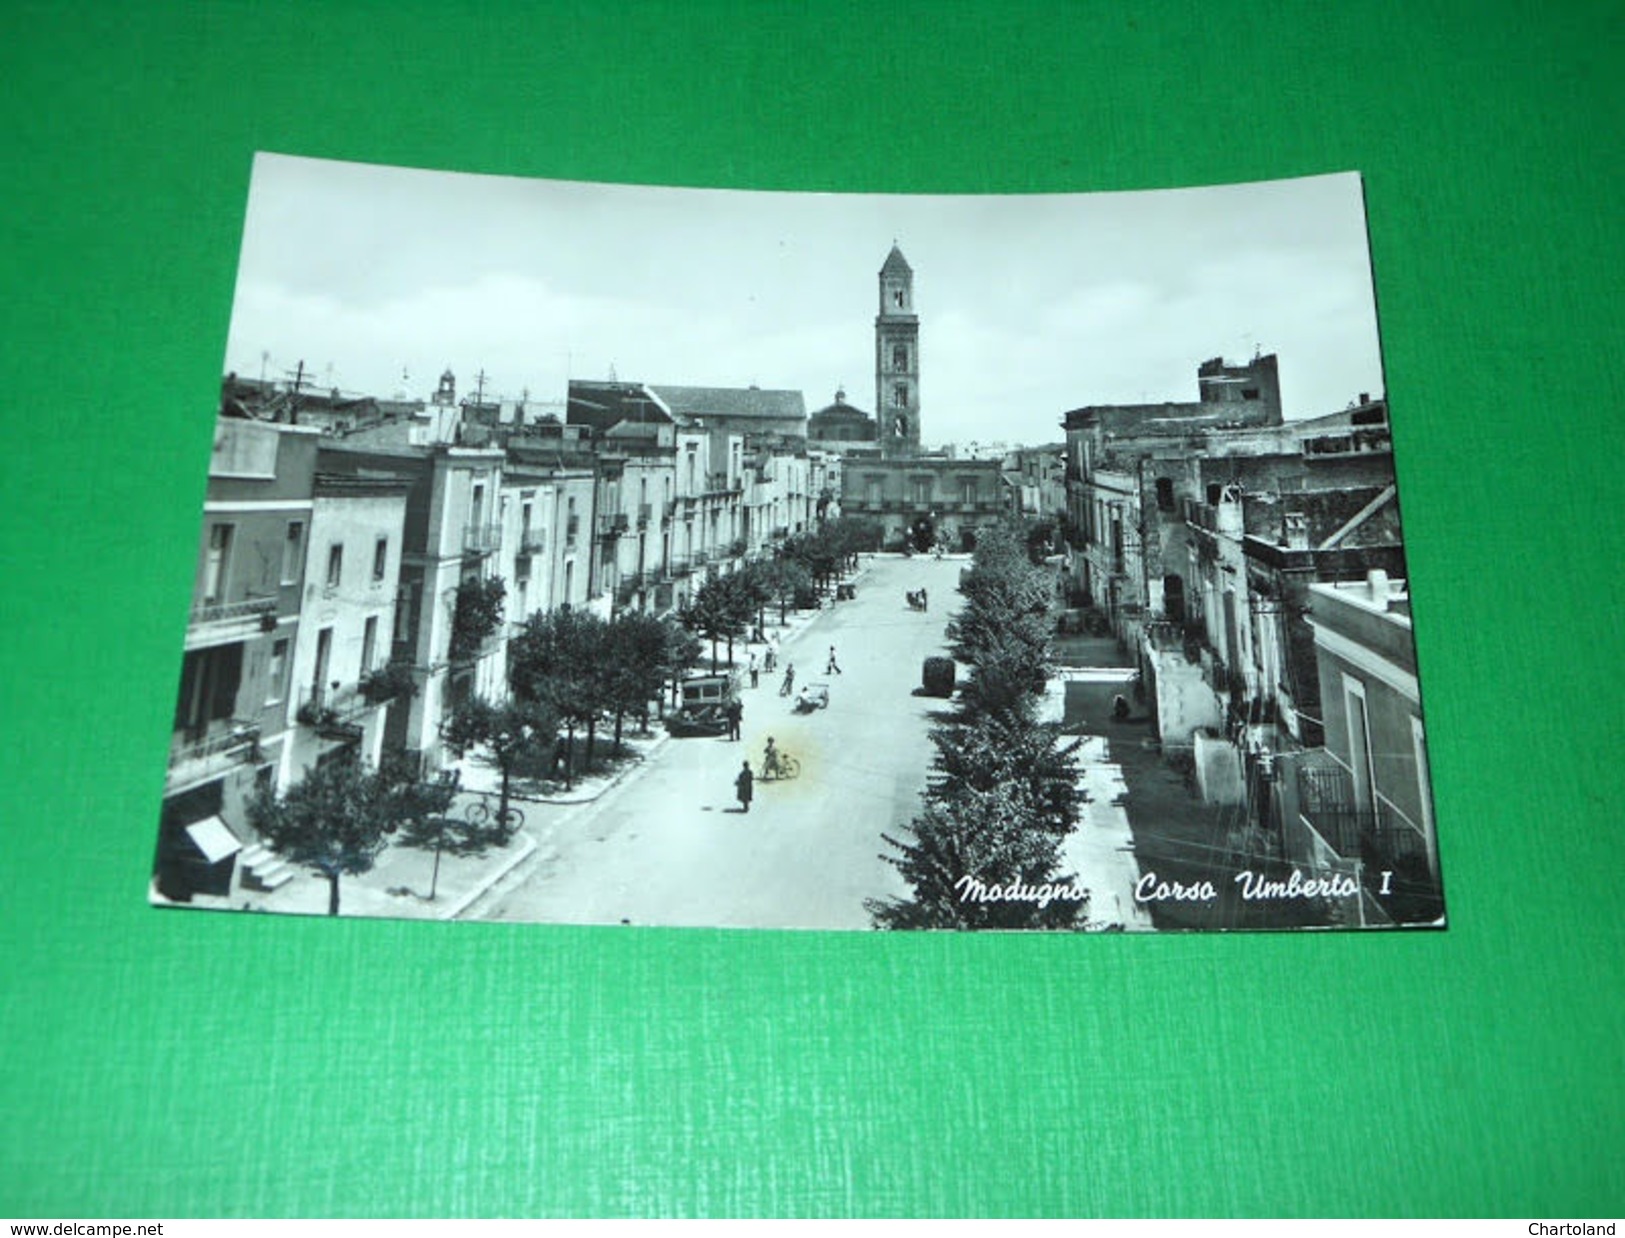 Cartolina Modugno - Corso Umberto I 1966 - Bari